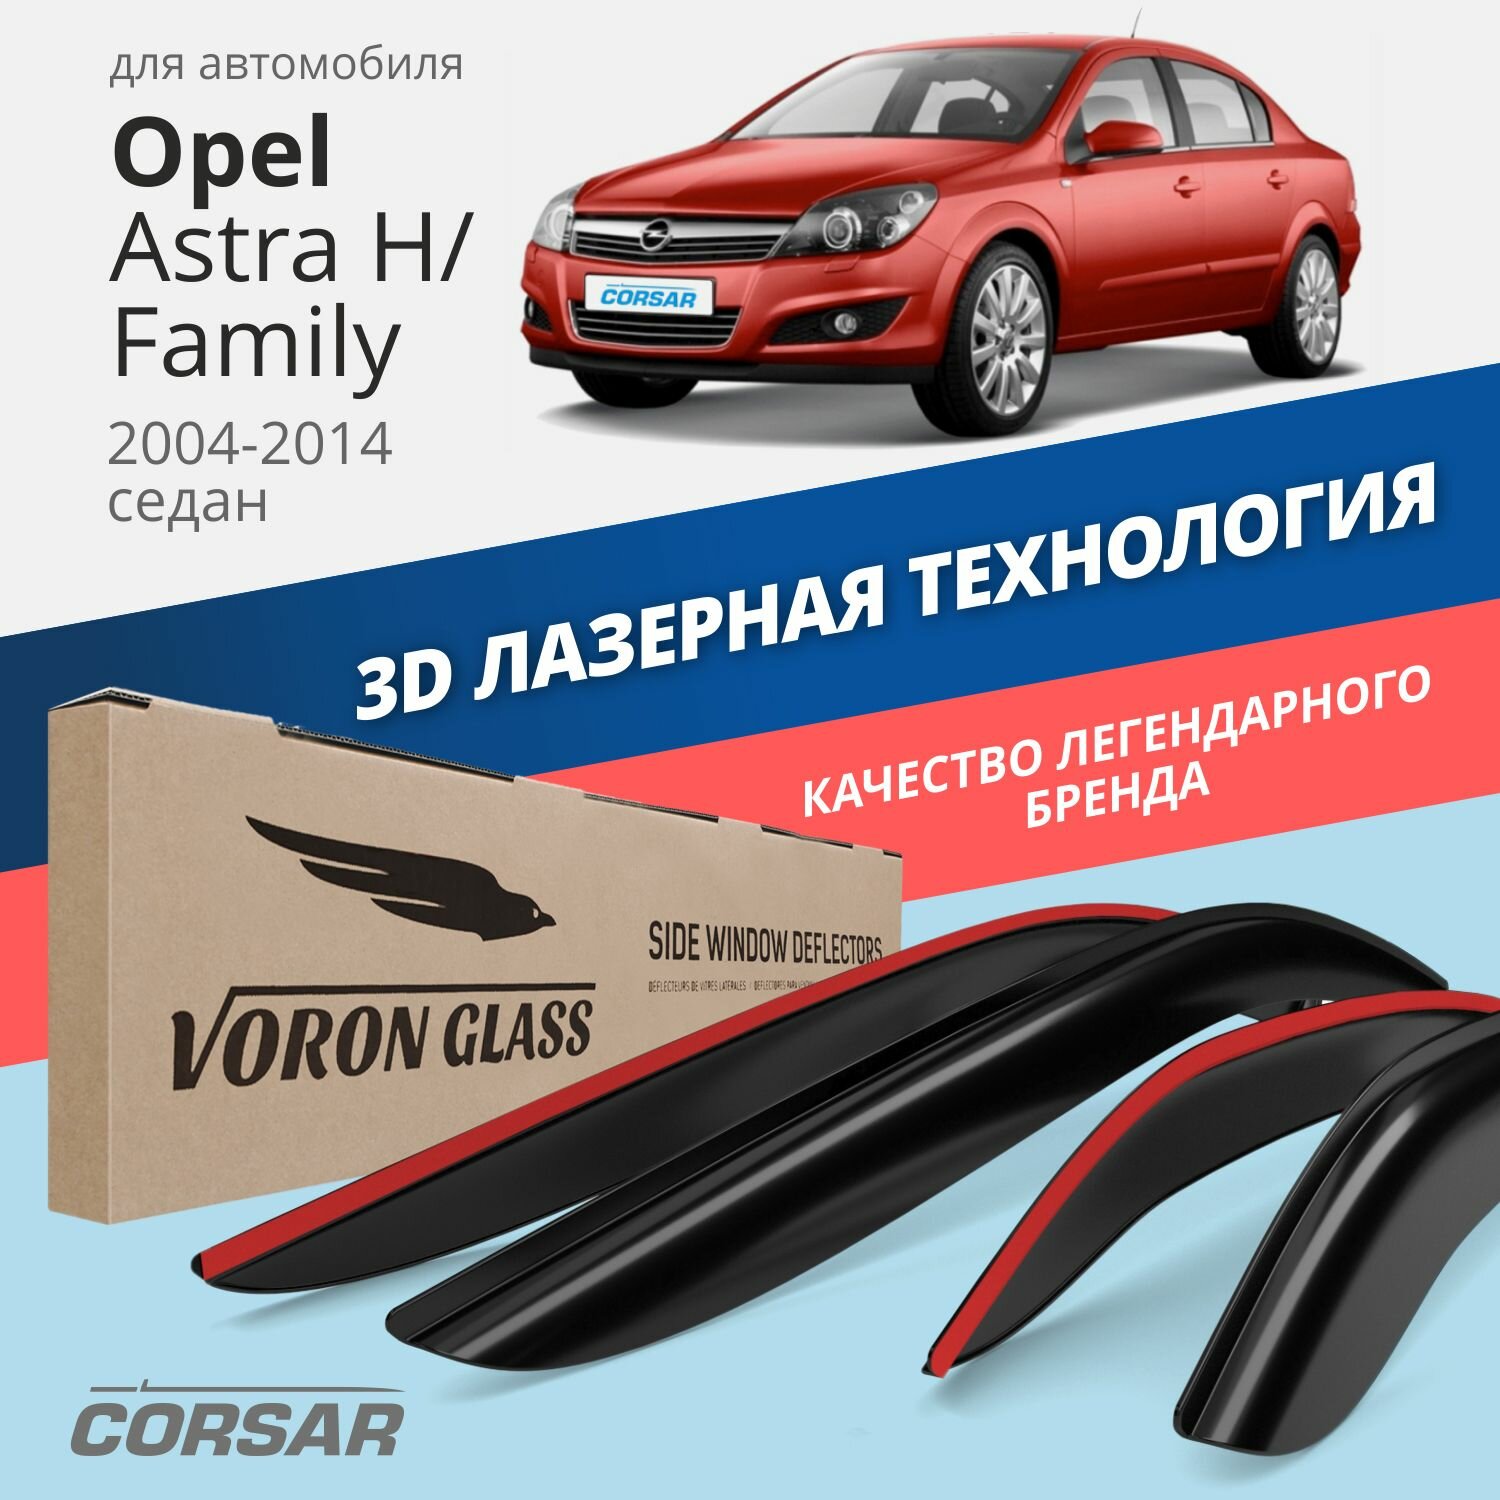 Дефлекторы окон Voron Glass серия Corsar для Opel Astra H / Family 2004-2014 /седан накладные 4 шт.